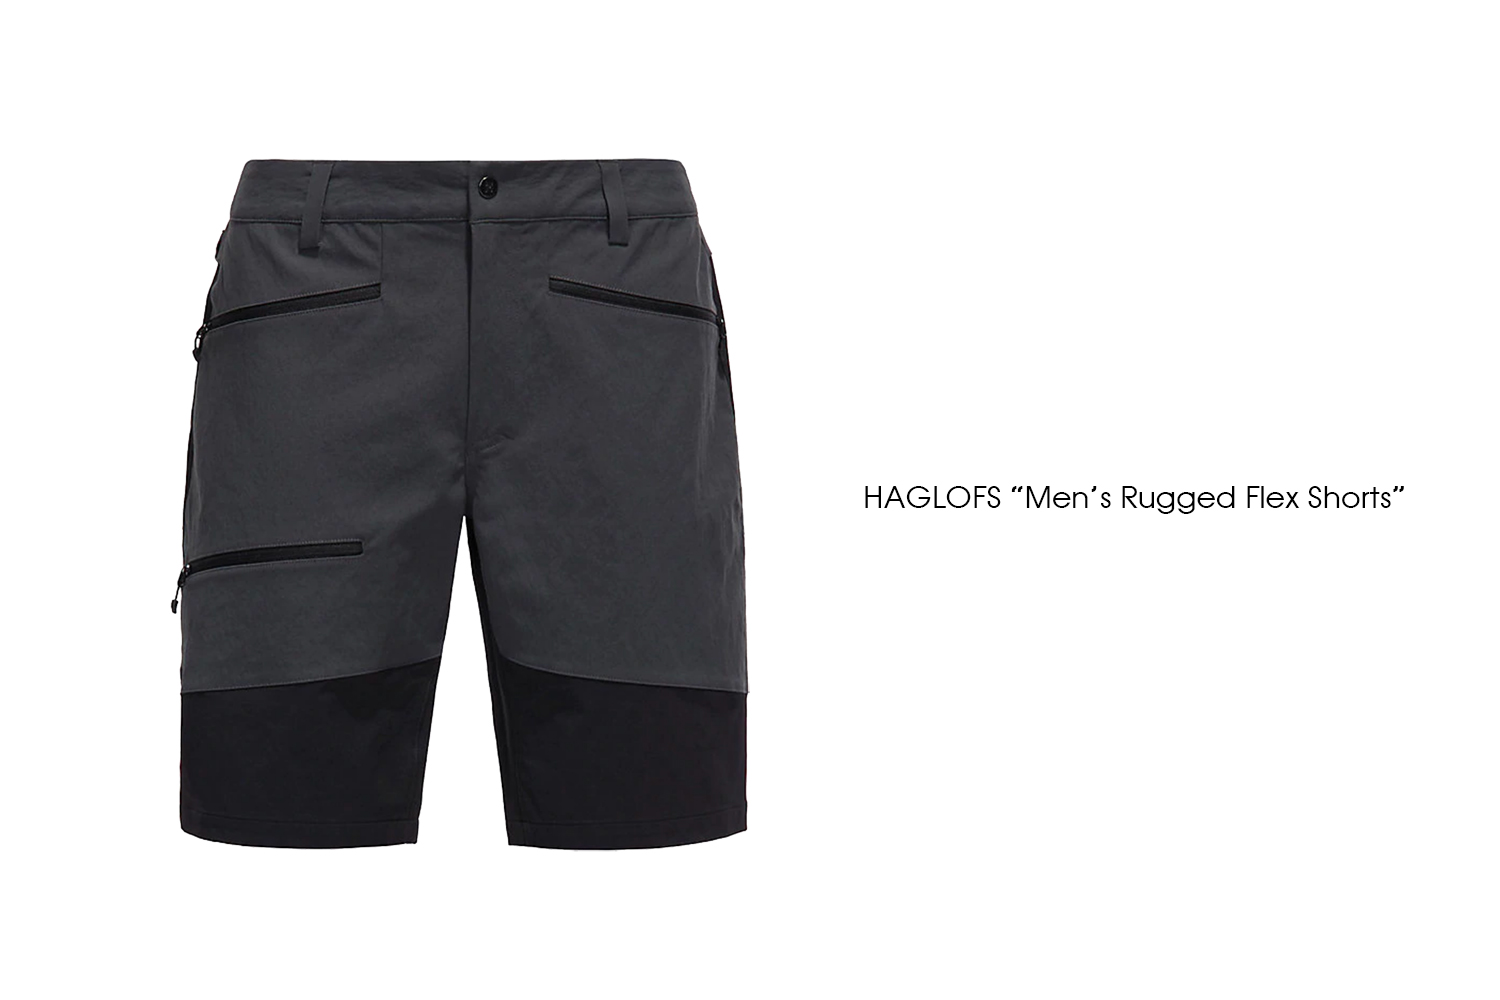 HAGLOFS "Men's Rugged Flex Shorts"